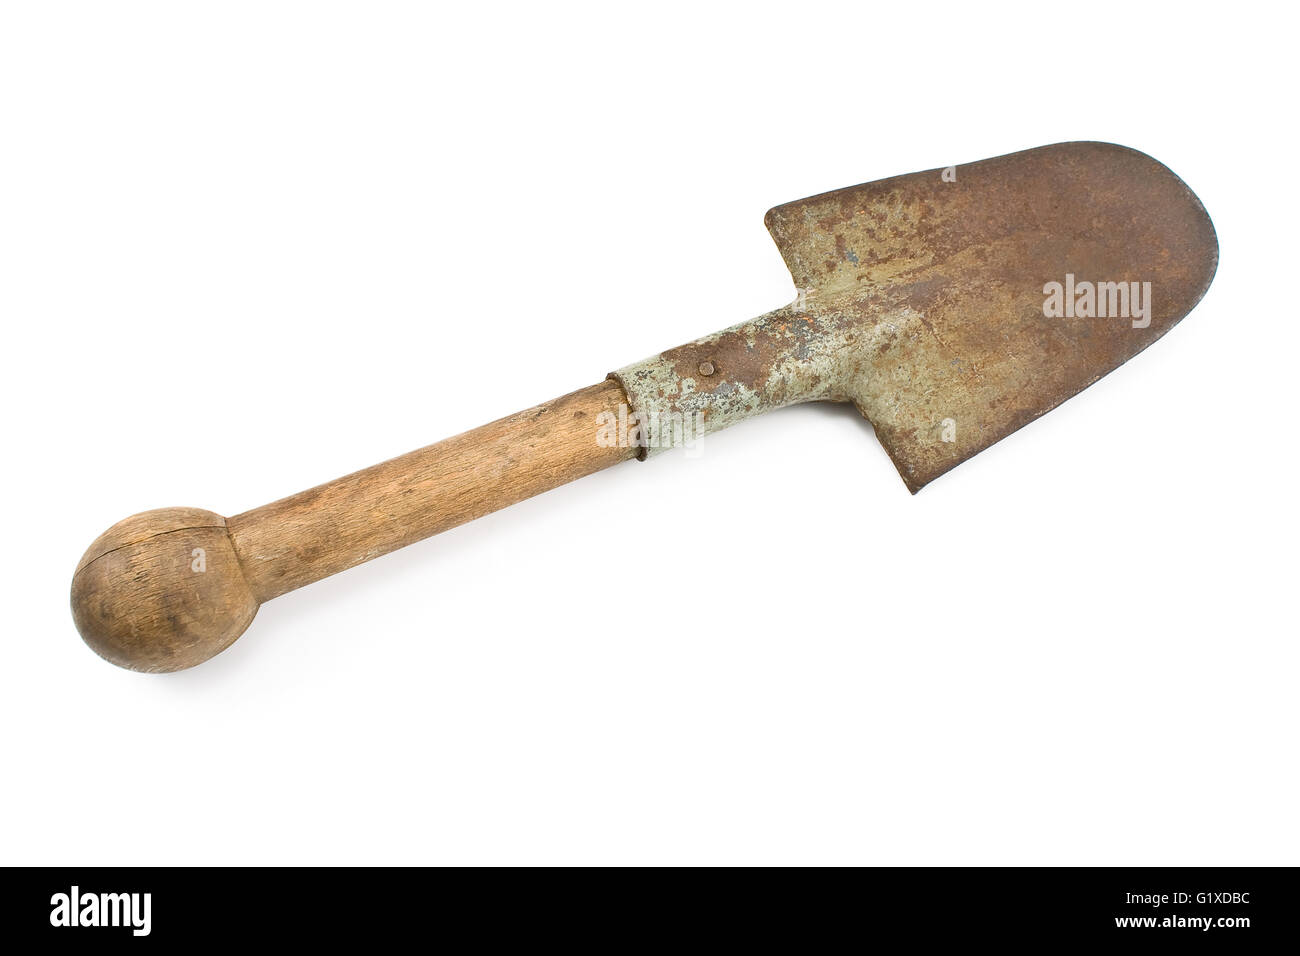 Small rusty shovel isolated on white Stock Photo